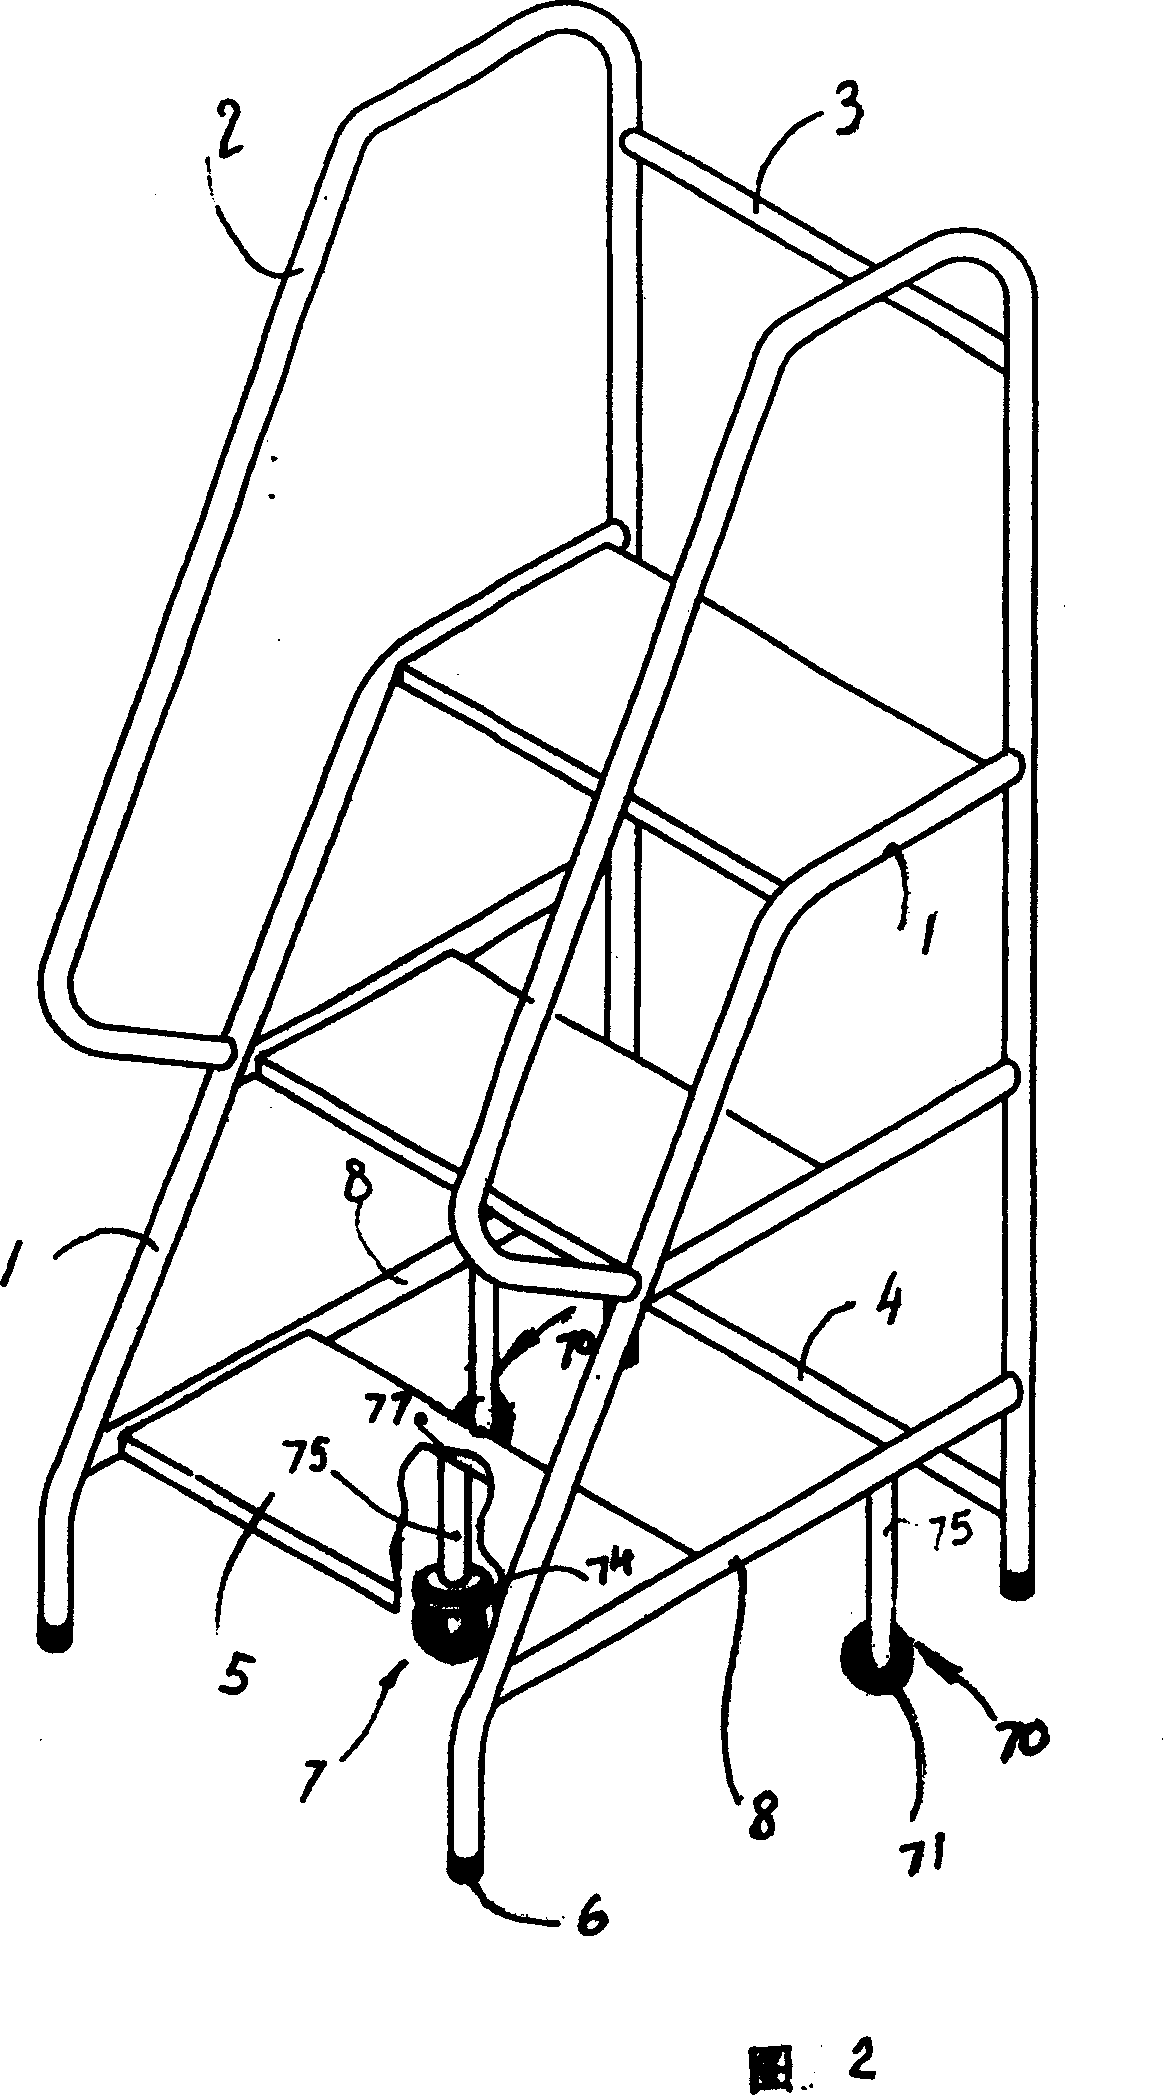 Handcart ascending frame